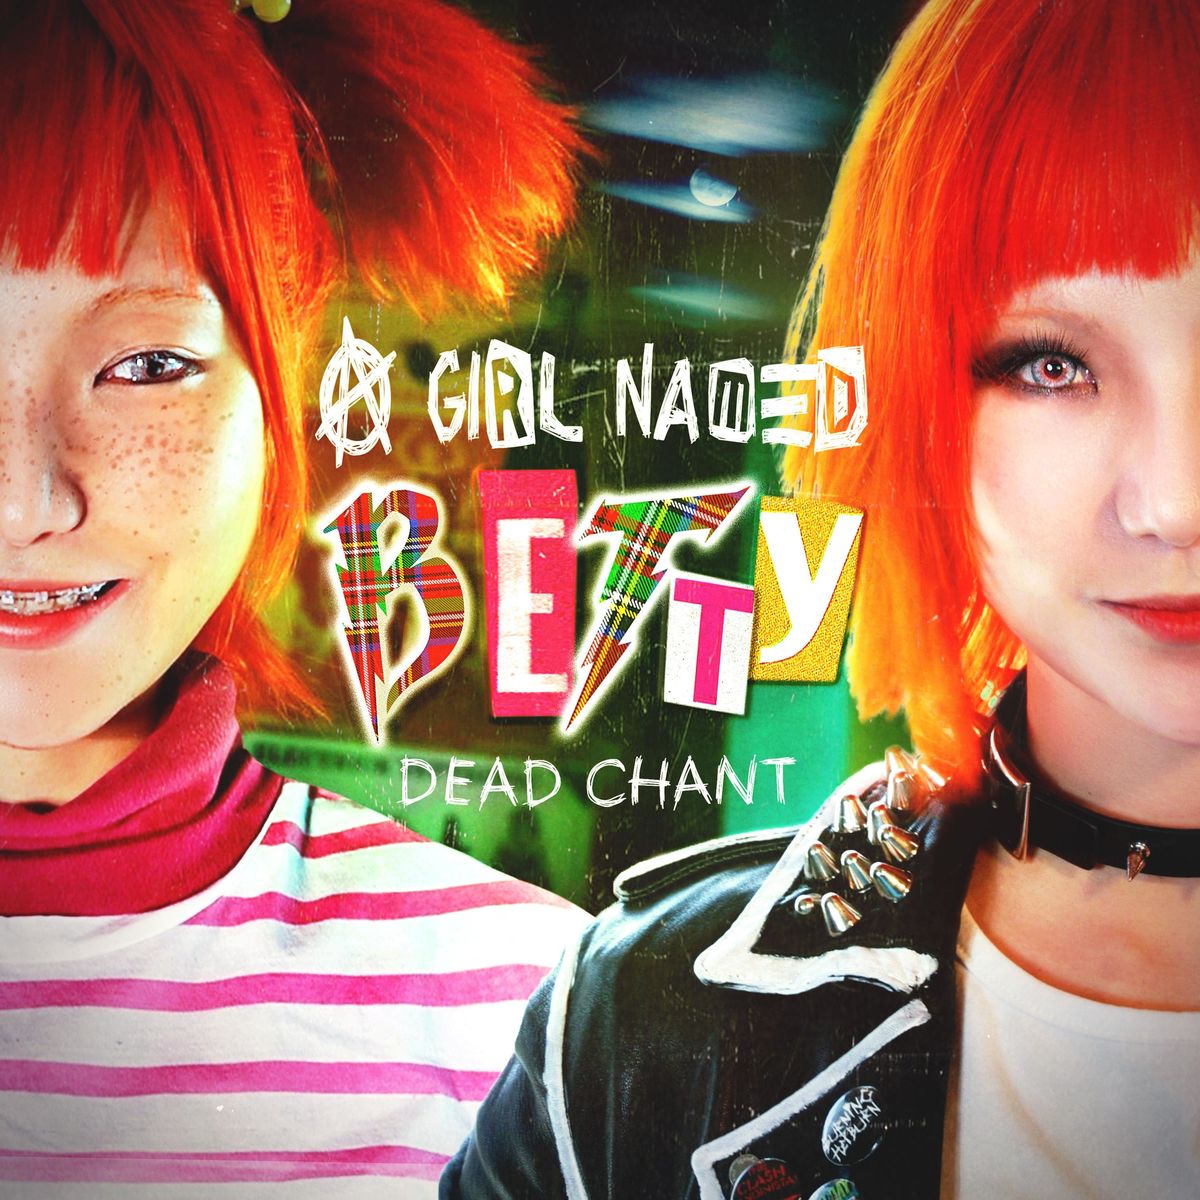 Dead Chant – A GIRL NAMED BETTY – Single